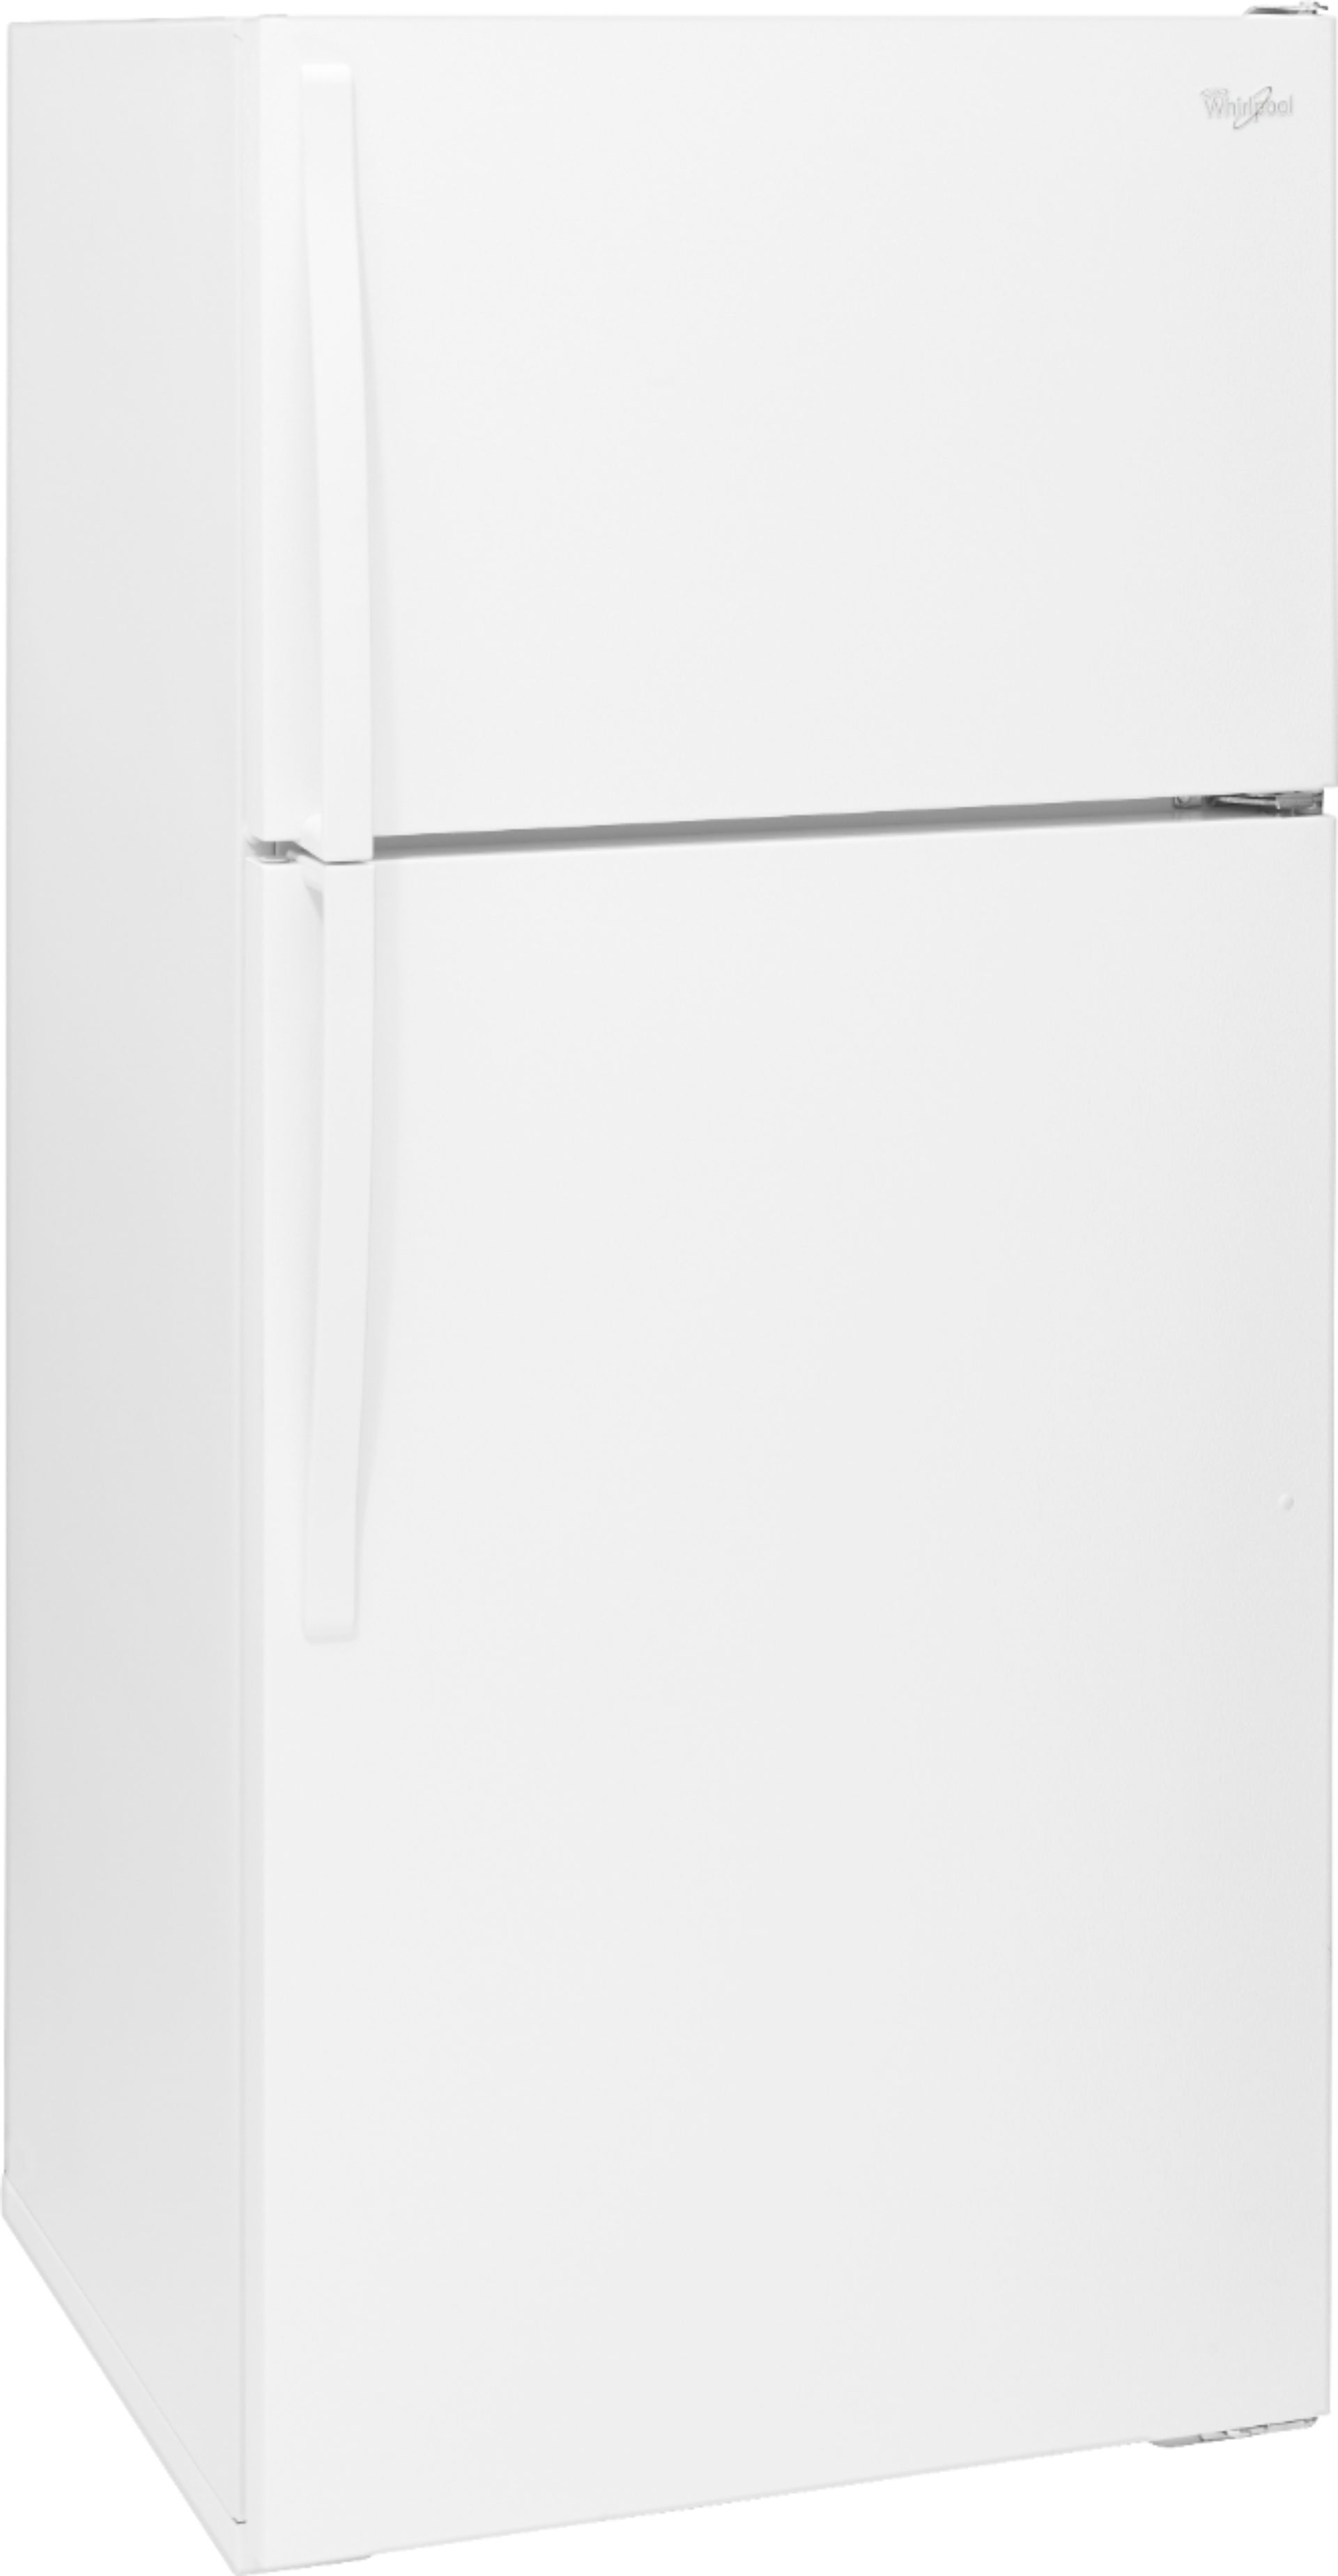 Angle View: GE GTS16DTHBB - Refrigerator/freezer - top-freezer - width: 28 in - depth: 31.6 in - height: 64.6 in - 15.4 cu. ft - black